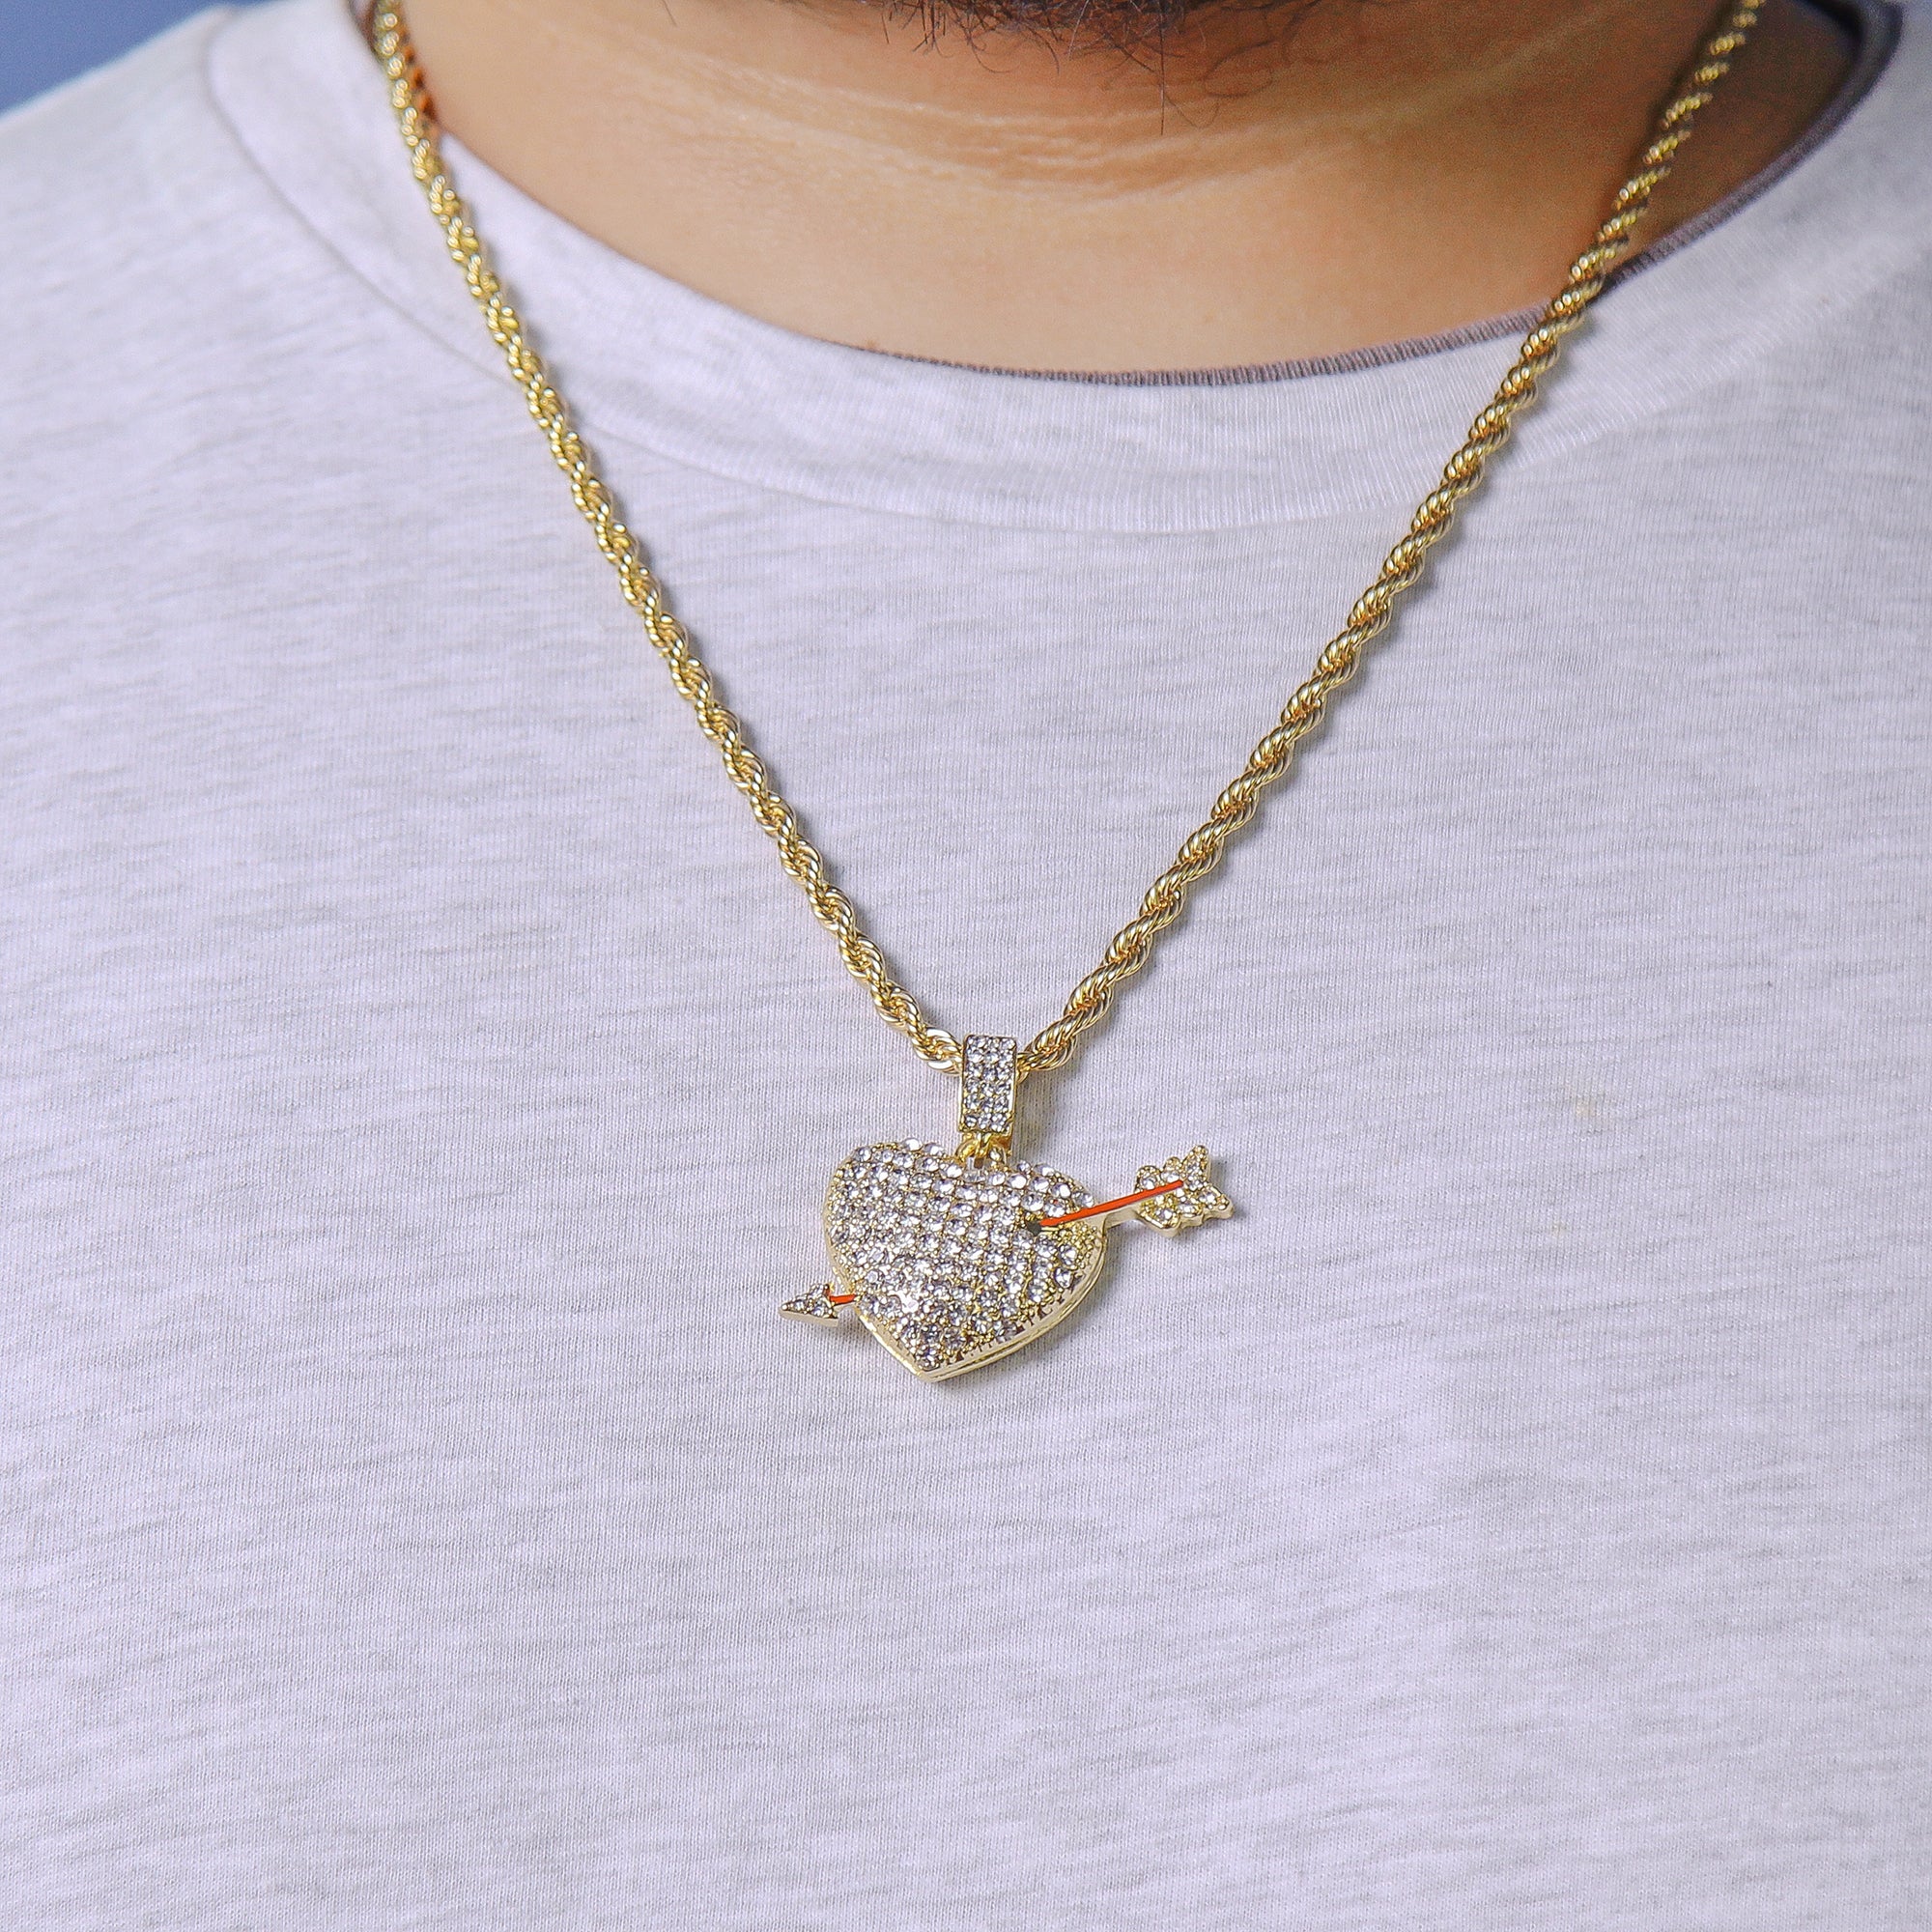 Arrow & Heart Pendant Rope Chain Men's Hip Hop 18k Cz Jewelry Necklace